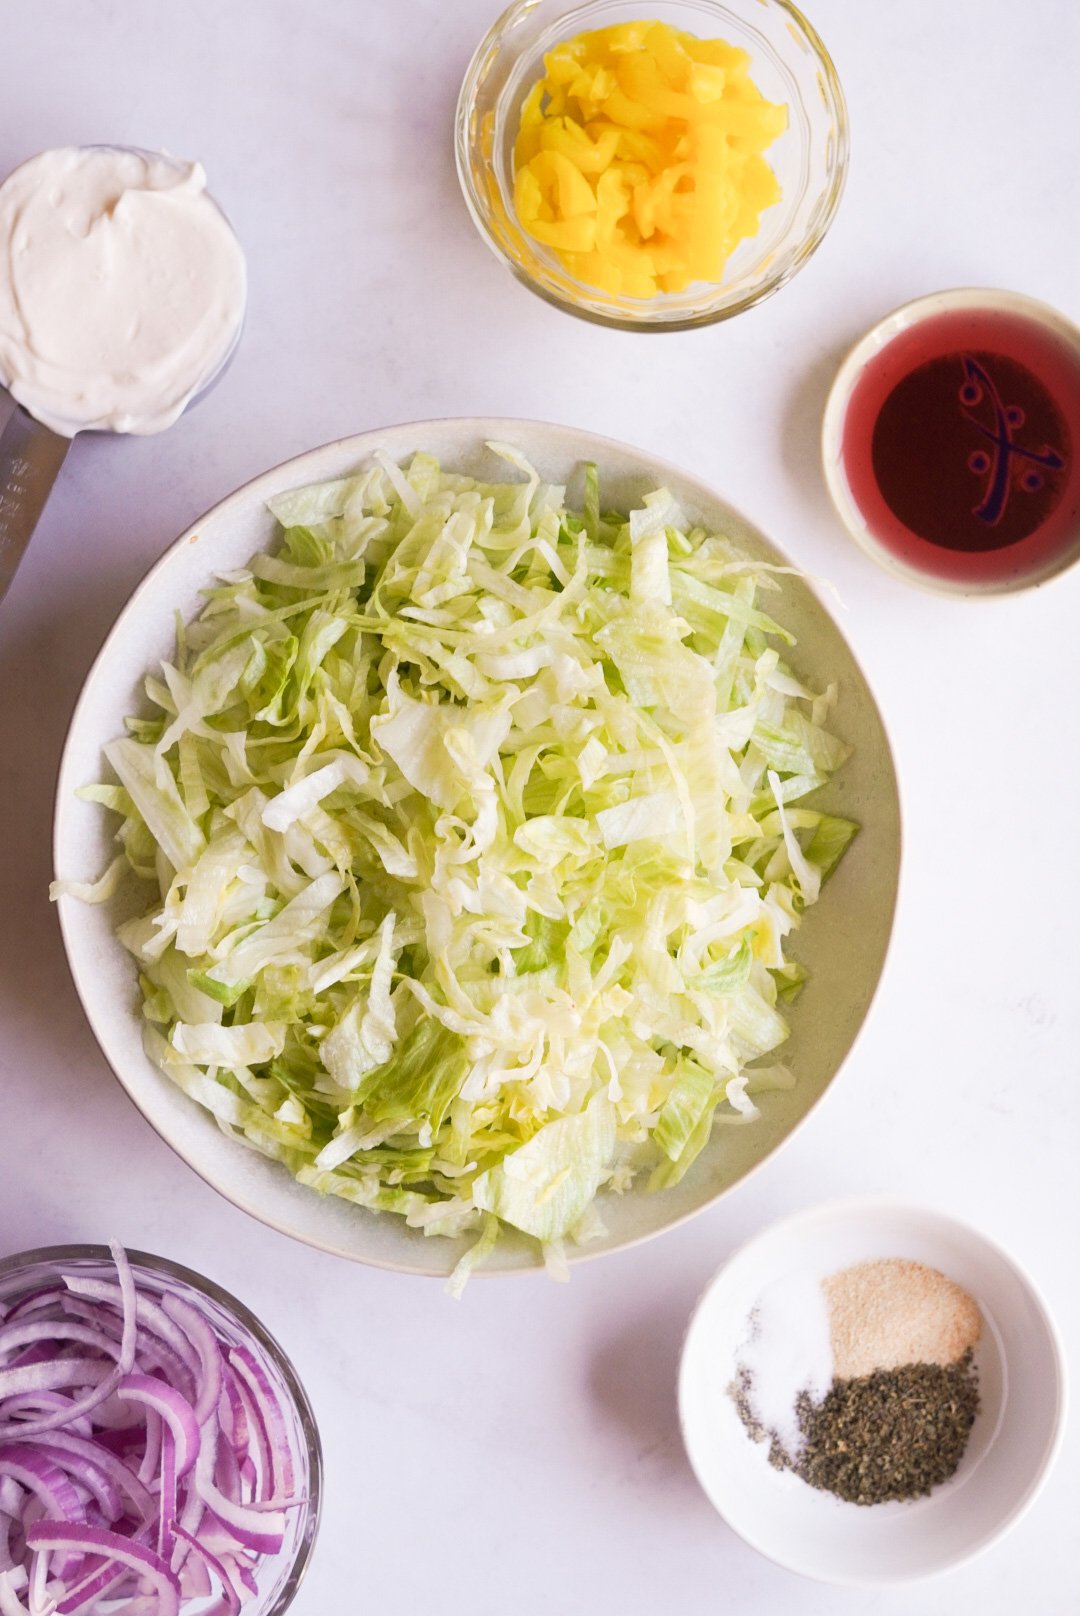 https://wellnessbykay.com/wp-content/uploads/2022/06/grinder-salad-ingredients.jpg